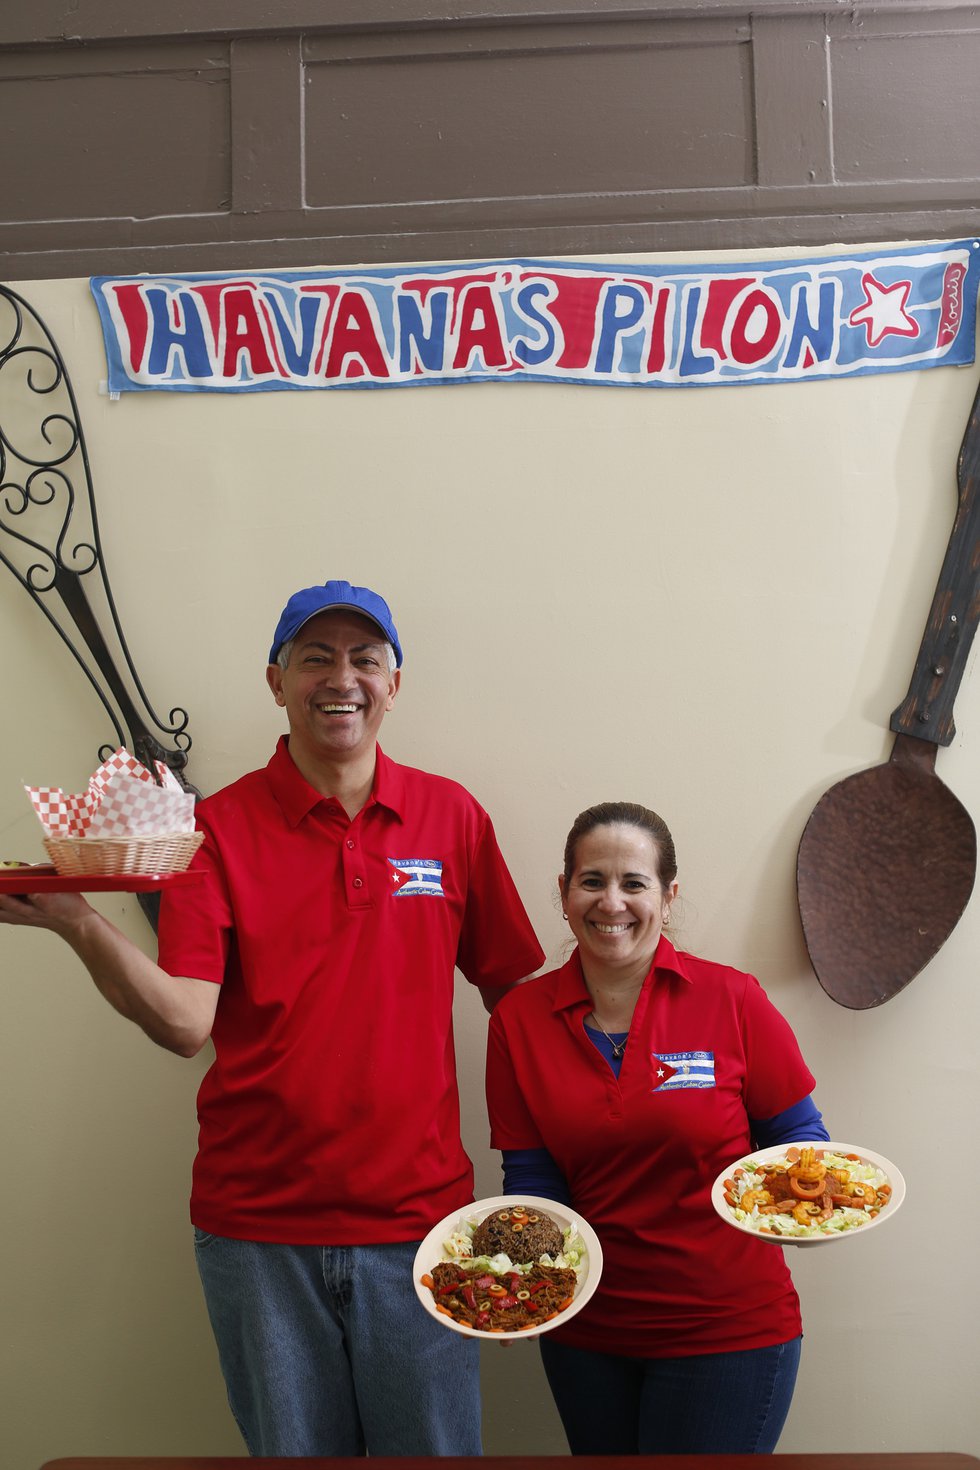 Havana’s Pilón: 
Pedro Pena and Marialys Gonzalez serve authentic Cuban food from breakfast until 8 p.m.